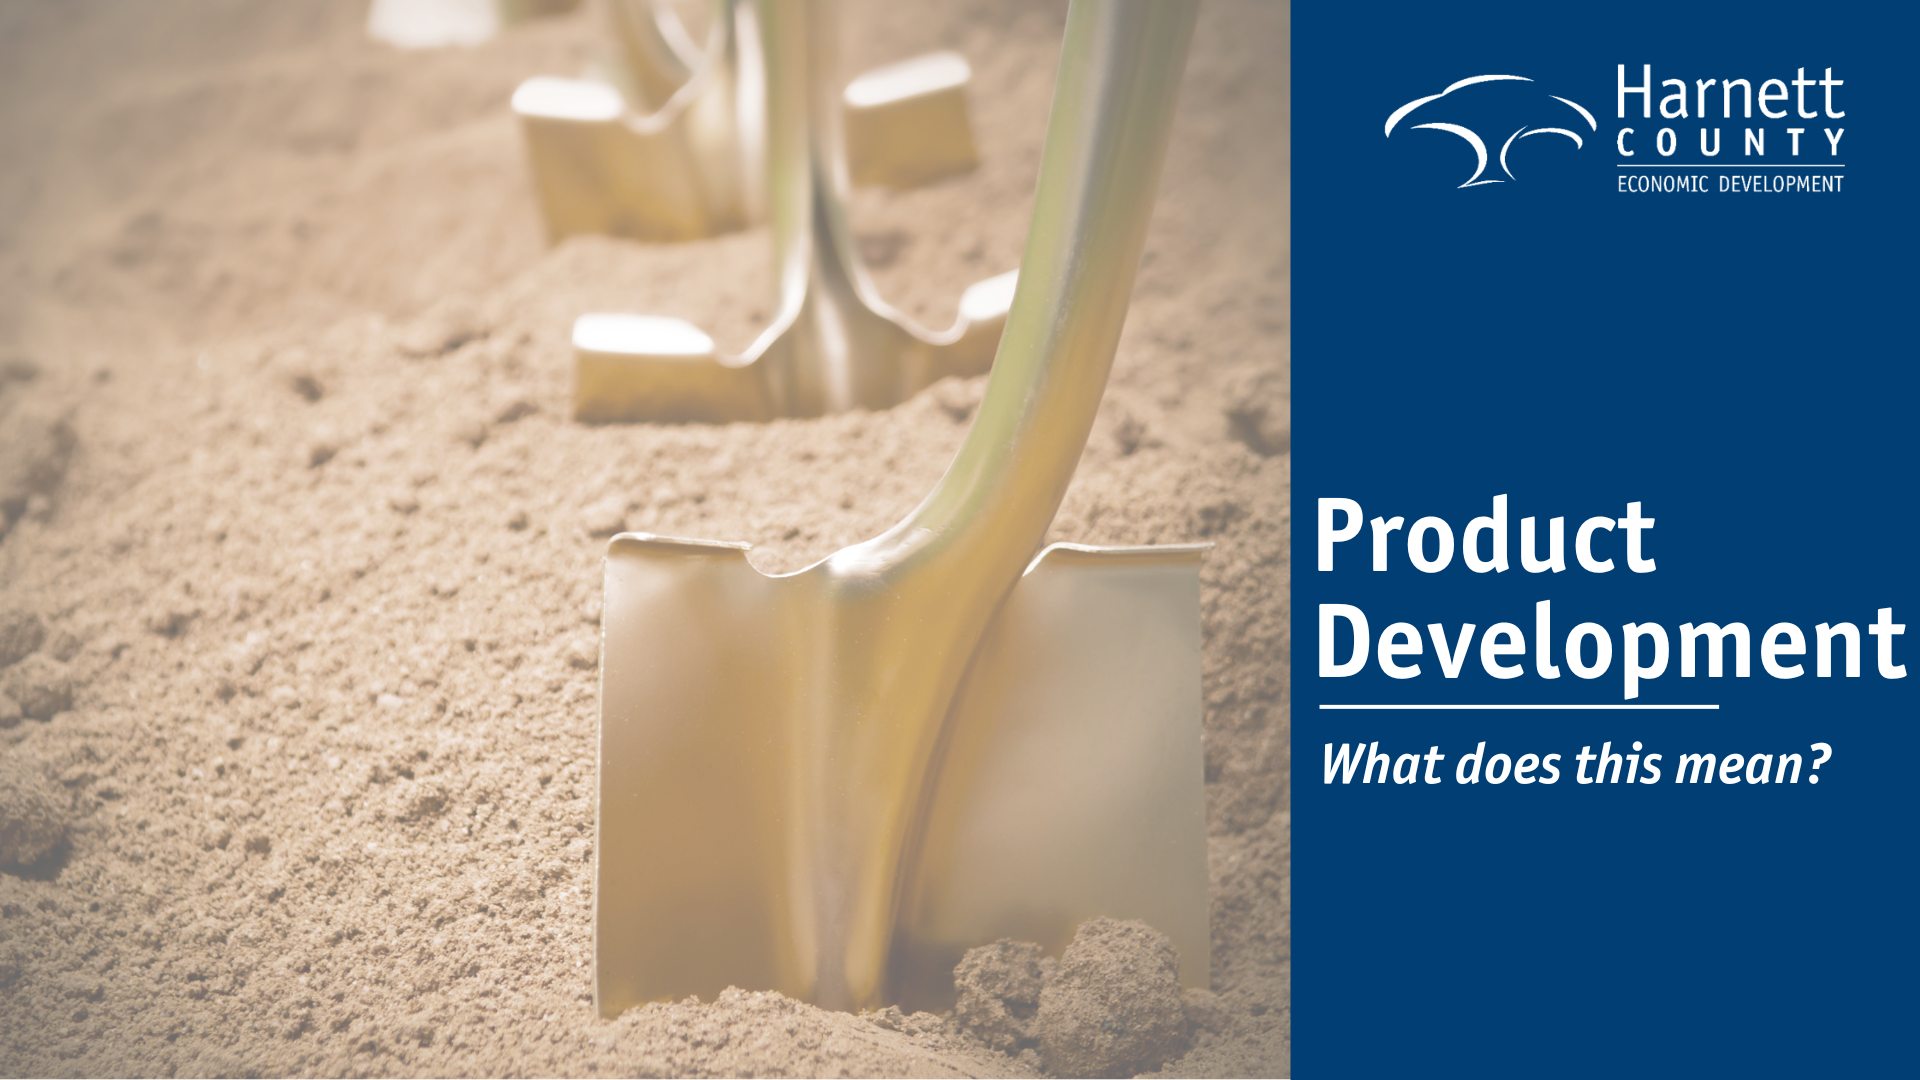 Economic Development Highlight: Product Development